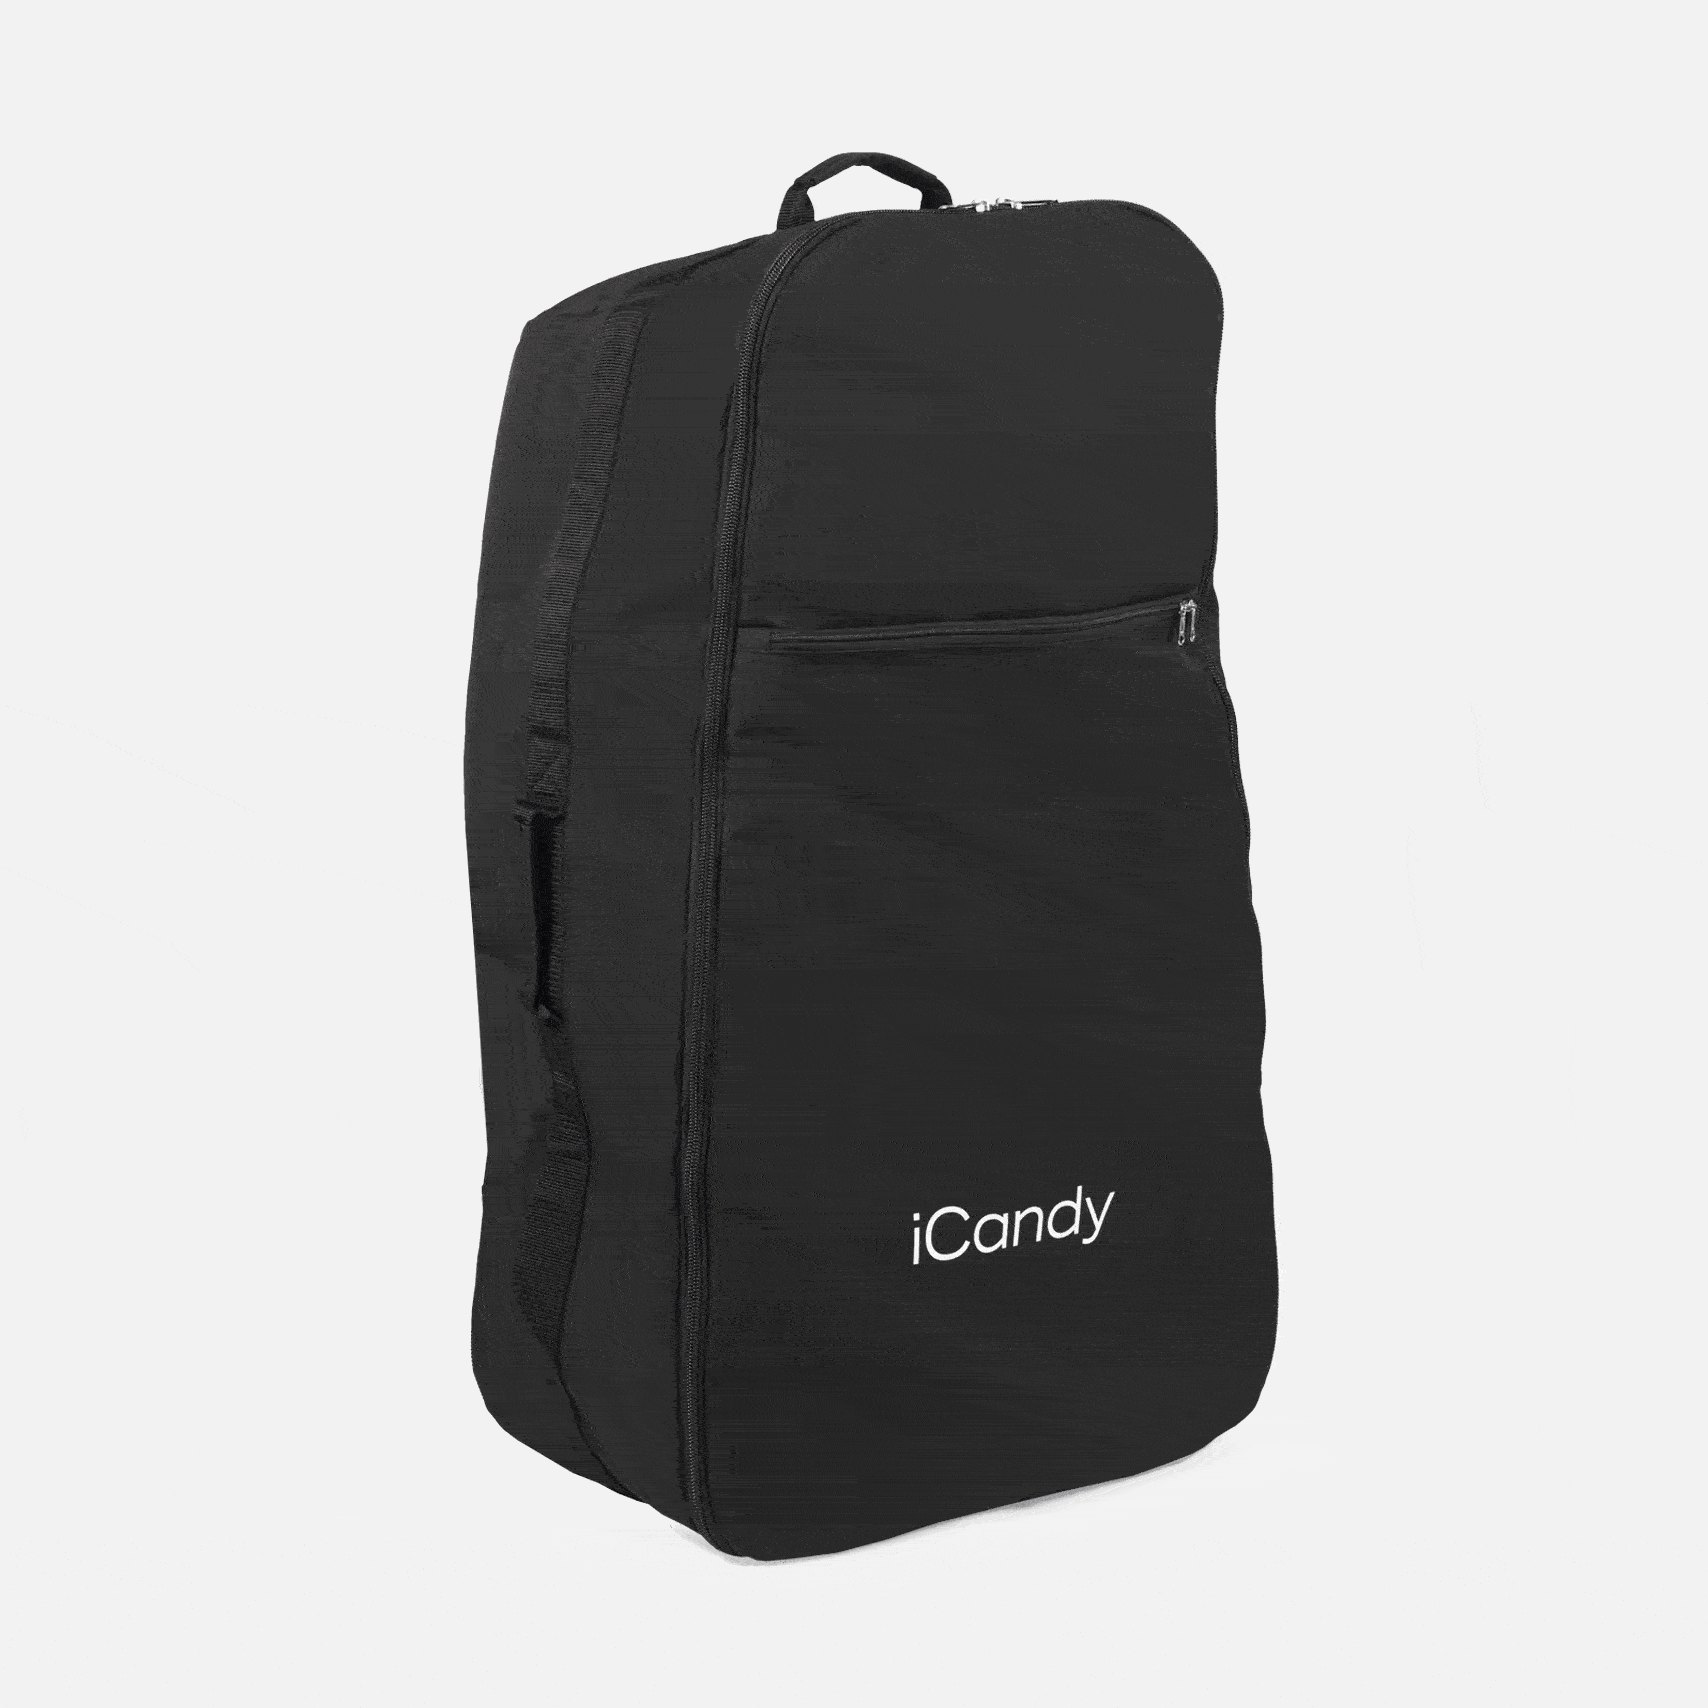 iCandy Universal Travel Bag